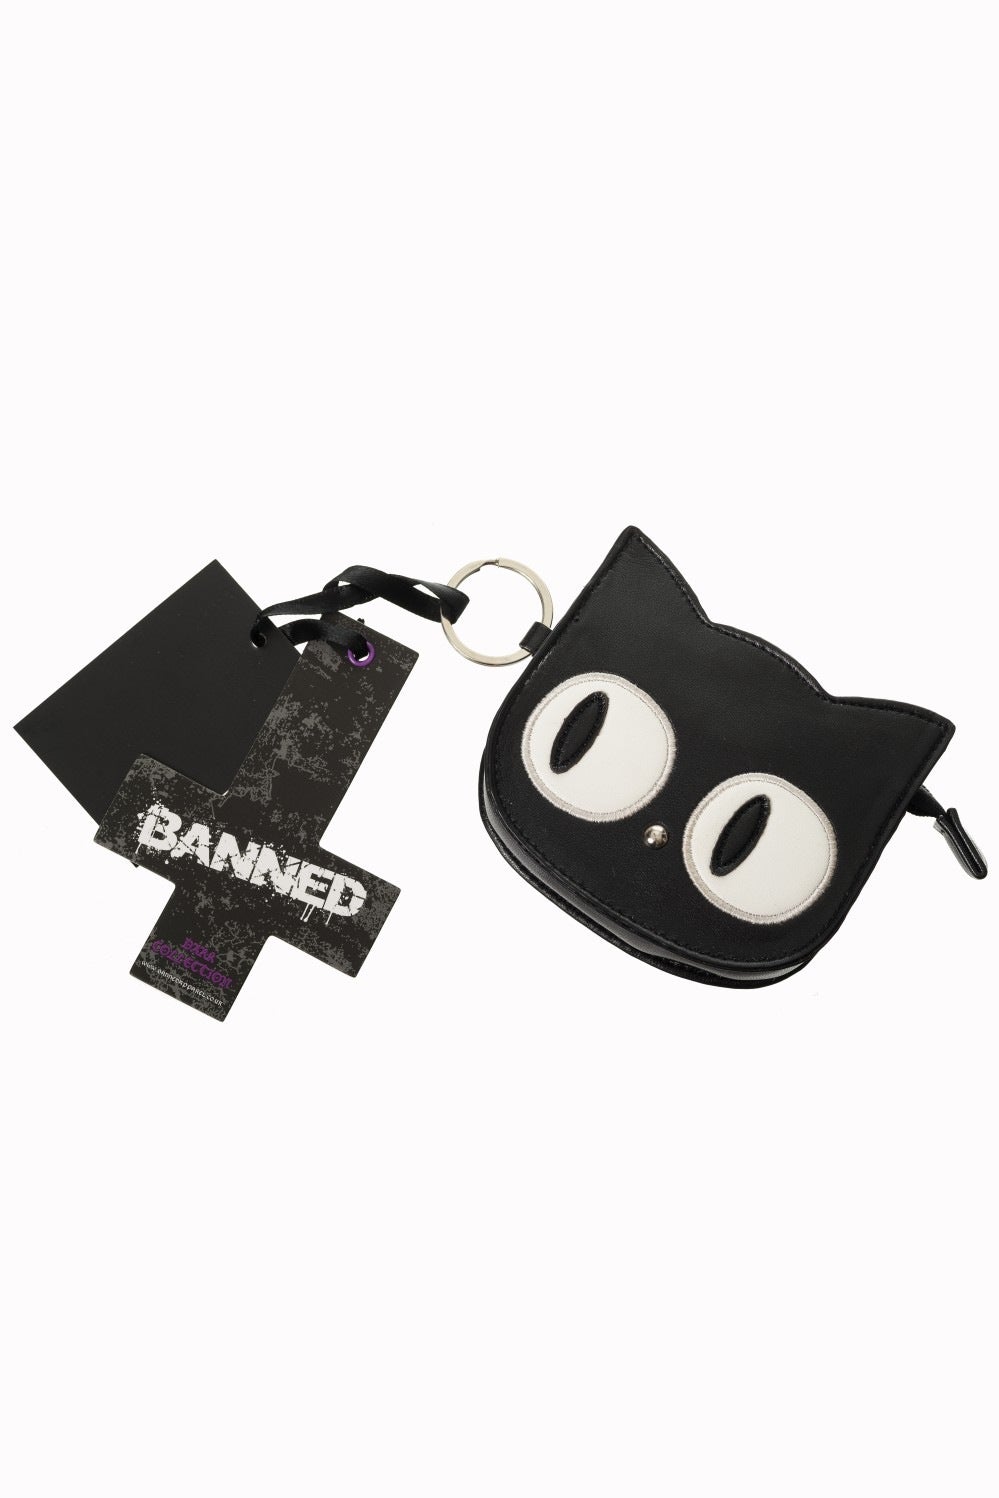 Banned Alternative Eye of the Beholder Black Cat Purse